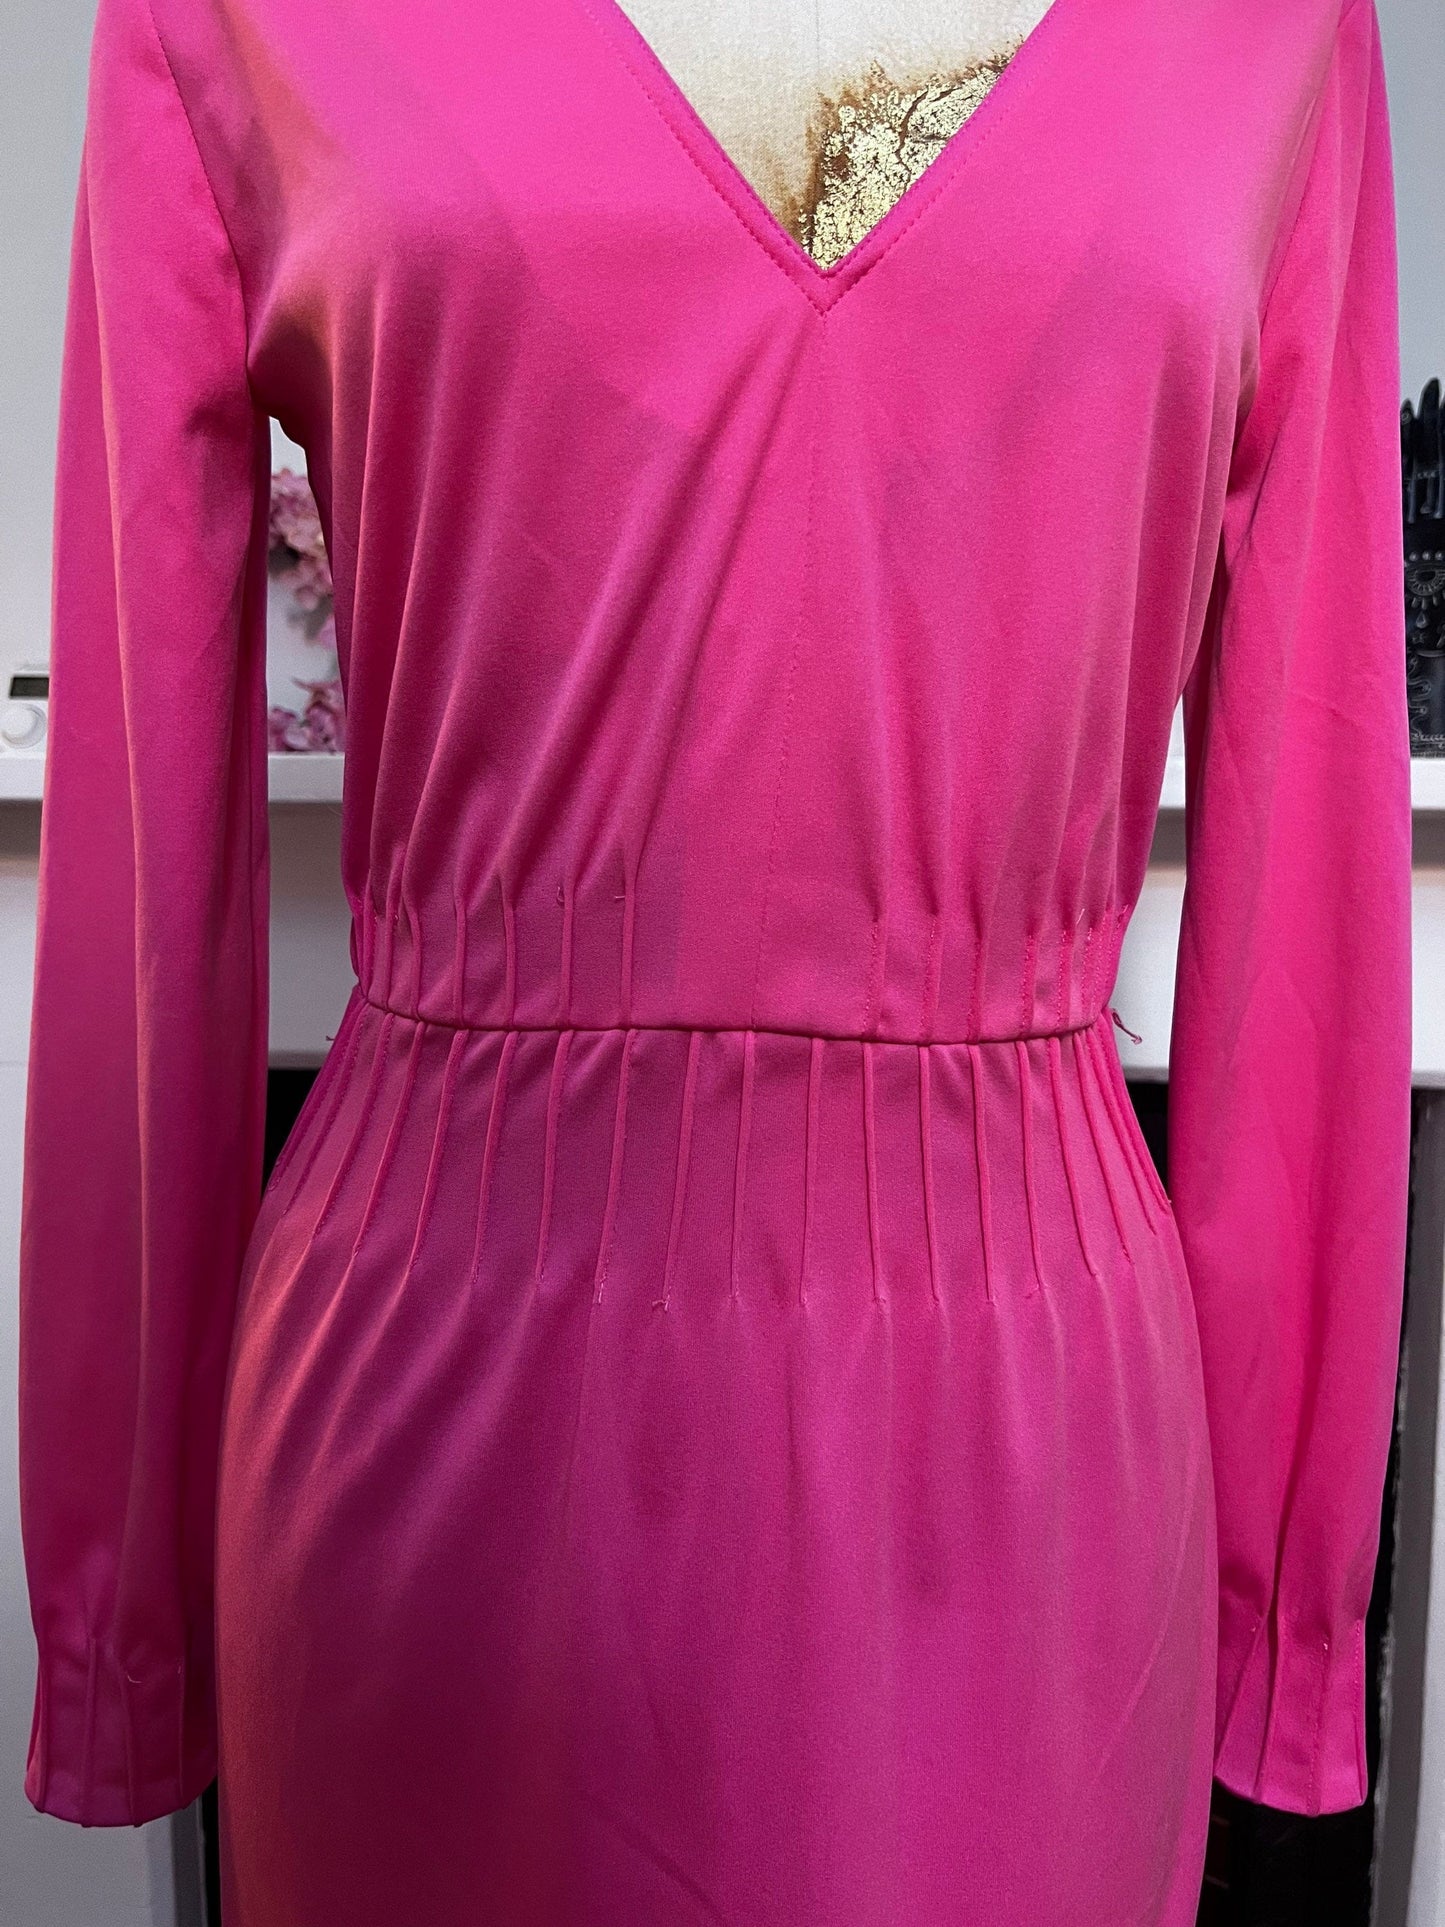 Jean Allen Maxi Dress 1960s Pink Maxi Dress - Fabulous Condition ...